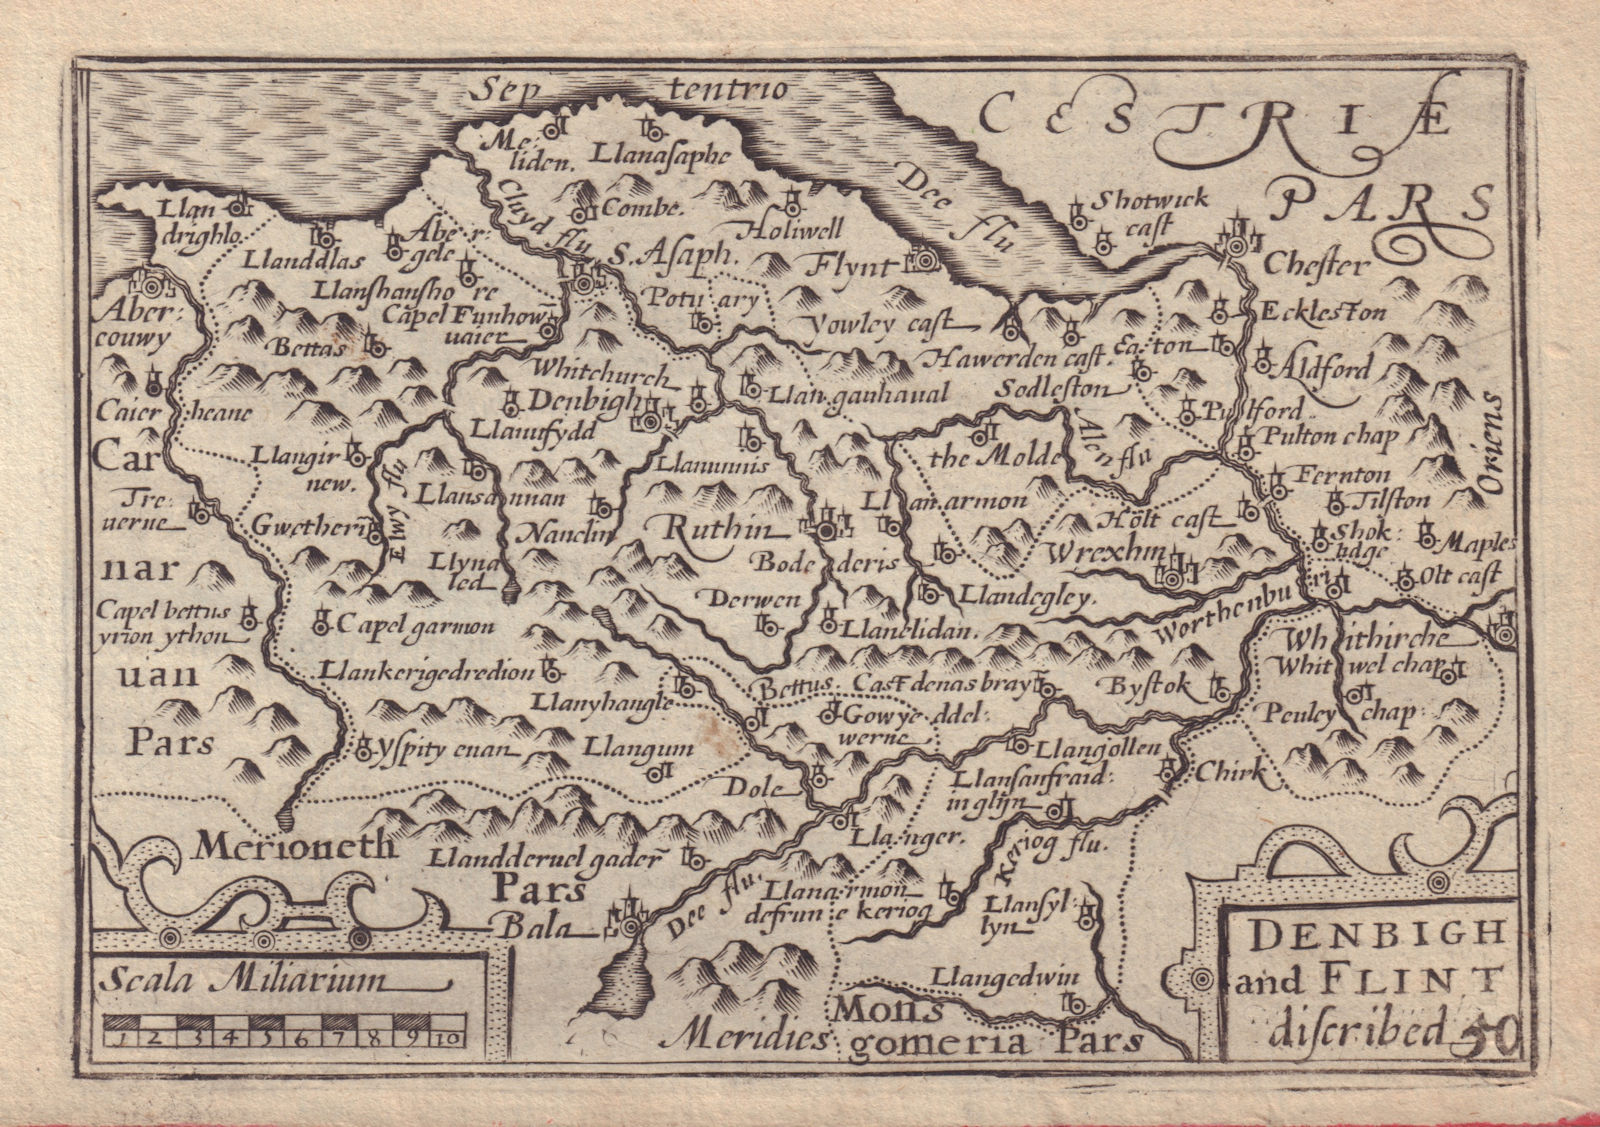 Denbigh & Flint discribed by Keere. "Speed miniature" Northeast Wales 1632 map